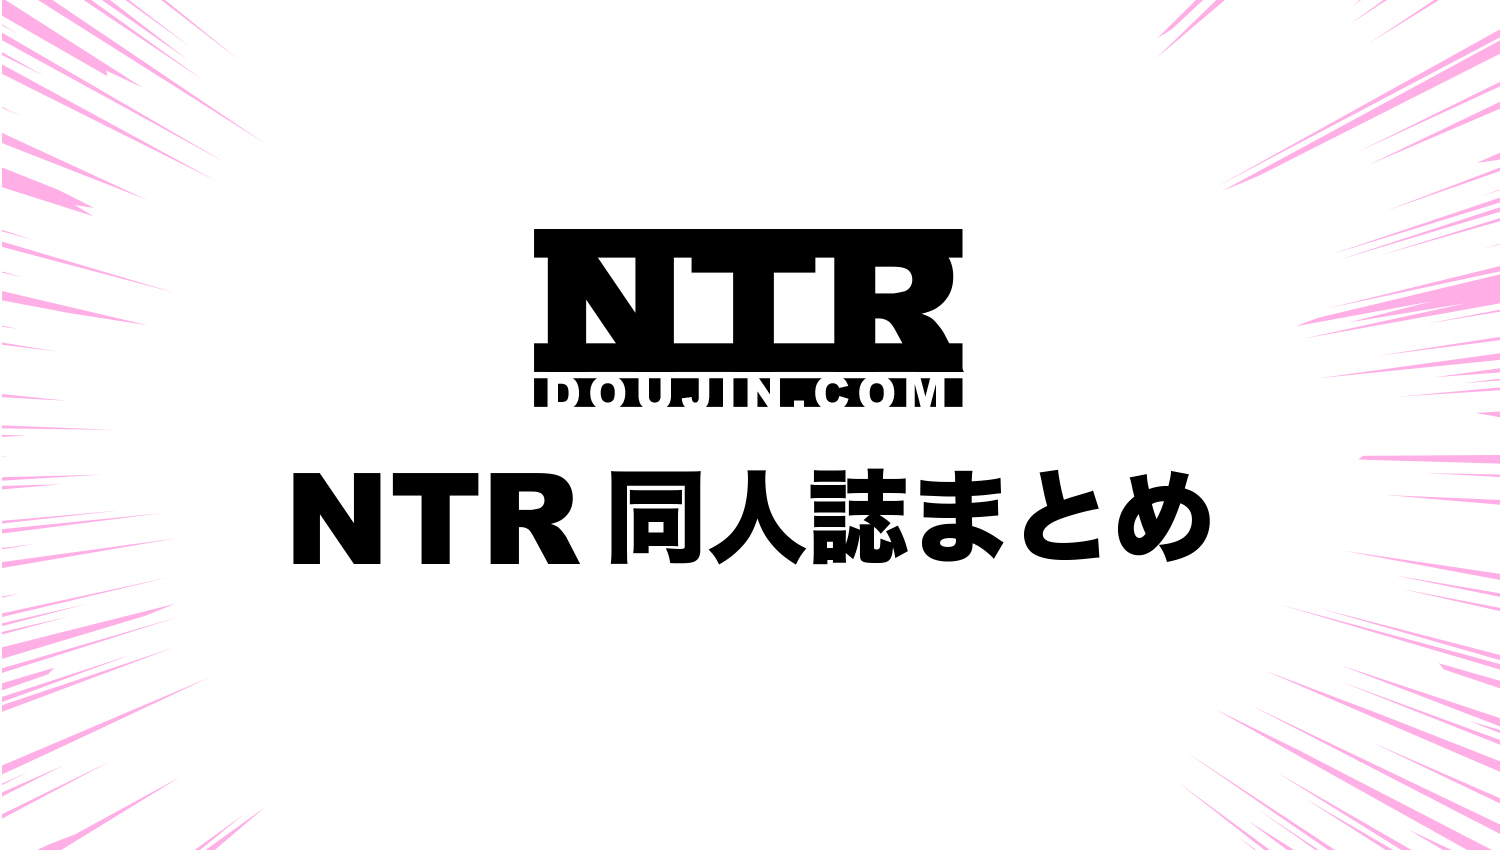 NTR同人誌専門の紹介サイト『NTR同人誌まとめ』です